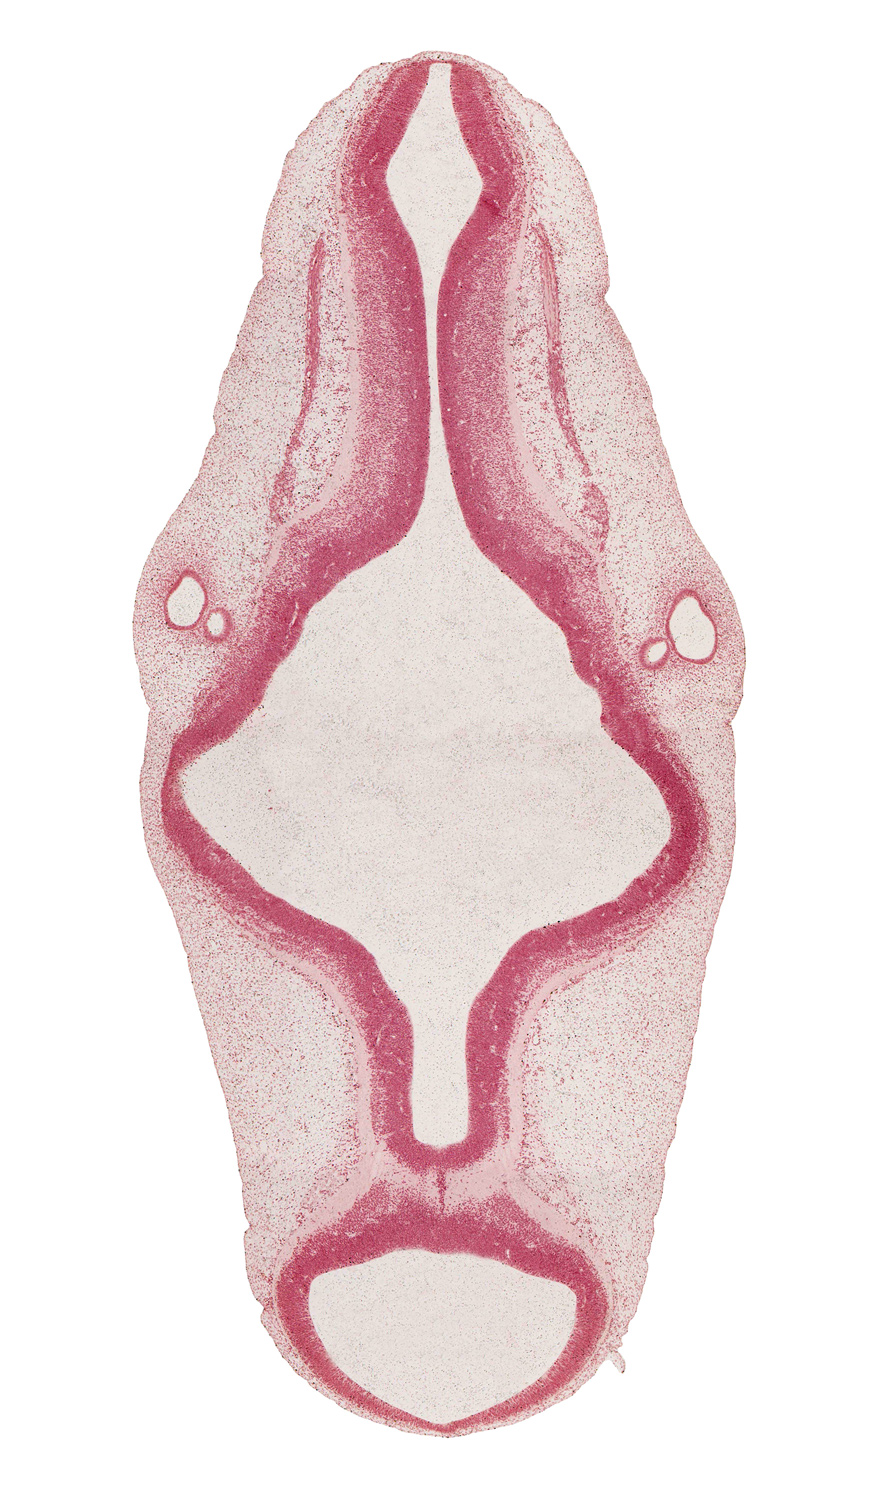 accessory nerve (CN XI), basis pedunculi of pons region (metencephalon), isthmus of rhombencephalon, mesencephalon (M2), metencephalon, myelencephalon, rhombencoel (fourth ventricle), rhombomere 4, rhombomere 5, rhombomere 6, rhombomere 7, roof plate, roof plate of rhombencephalon, sulcus limitans, tectum, tegmentum, vascular plexus